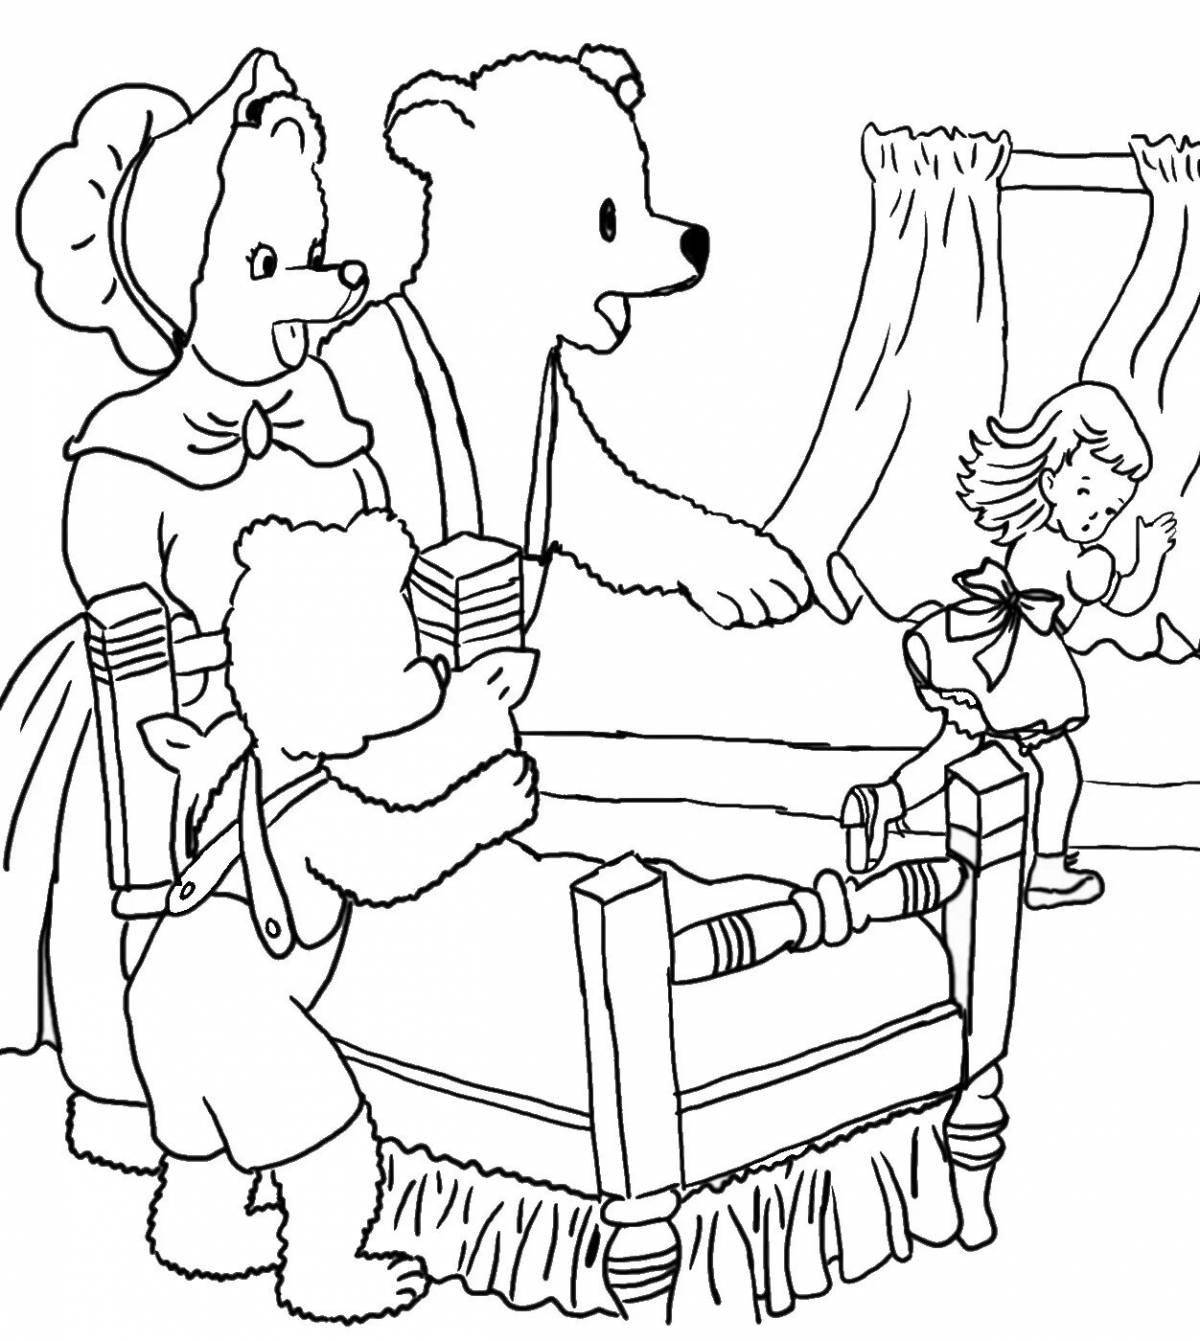 Three bears wonderful coloring book